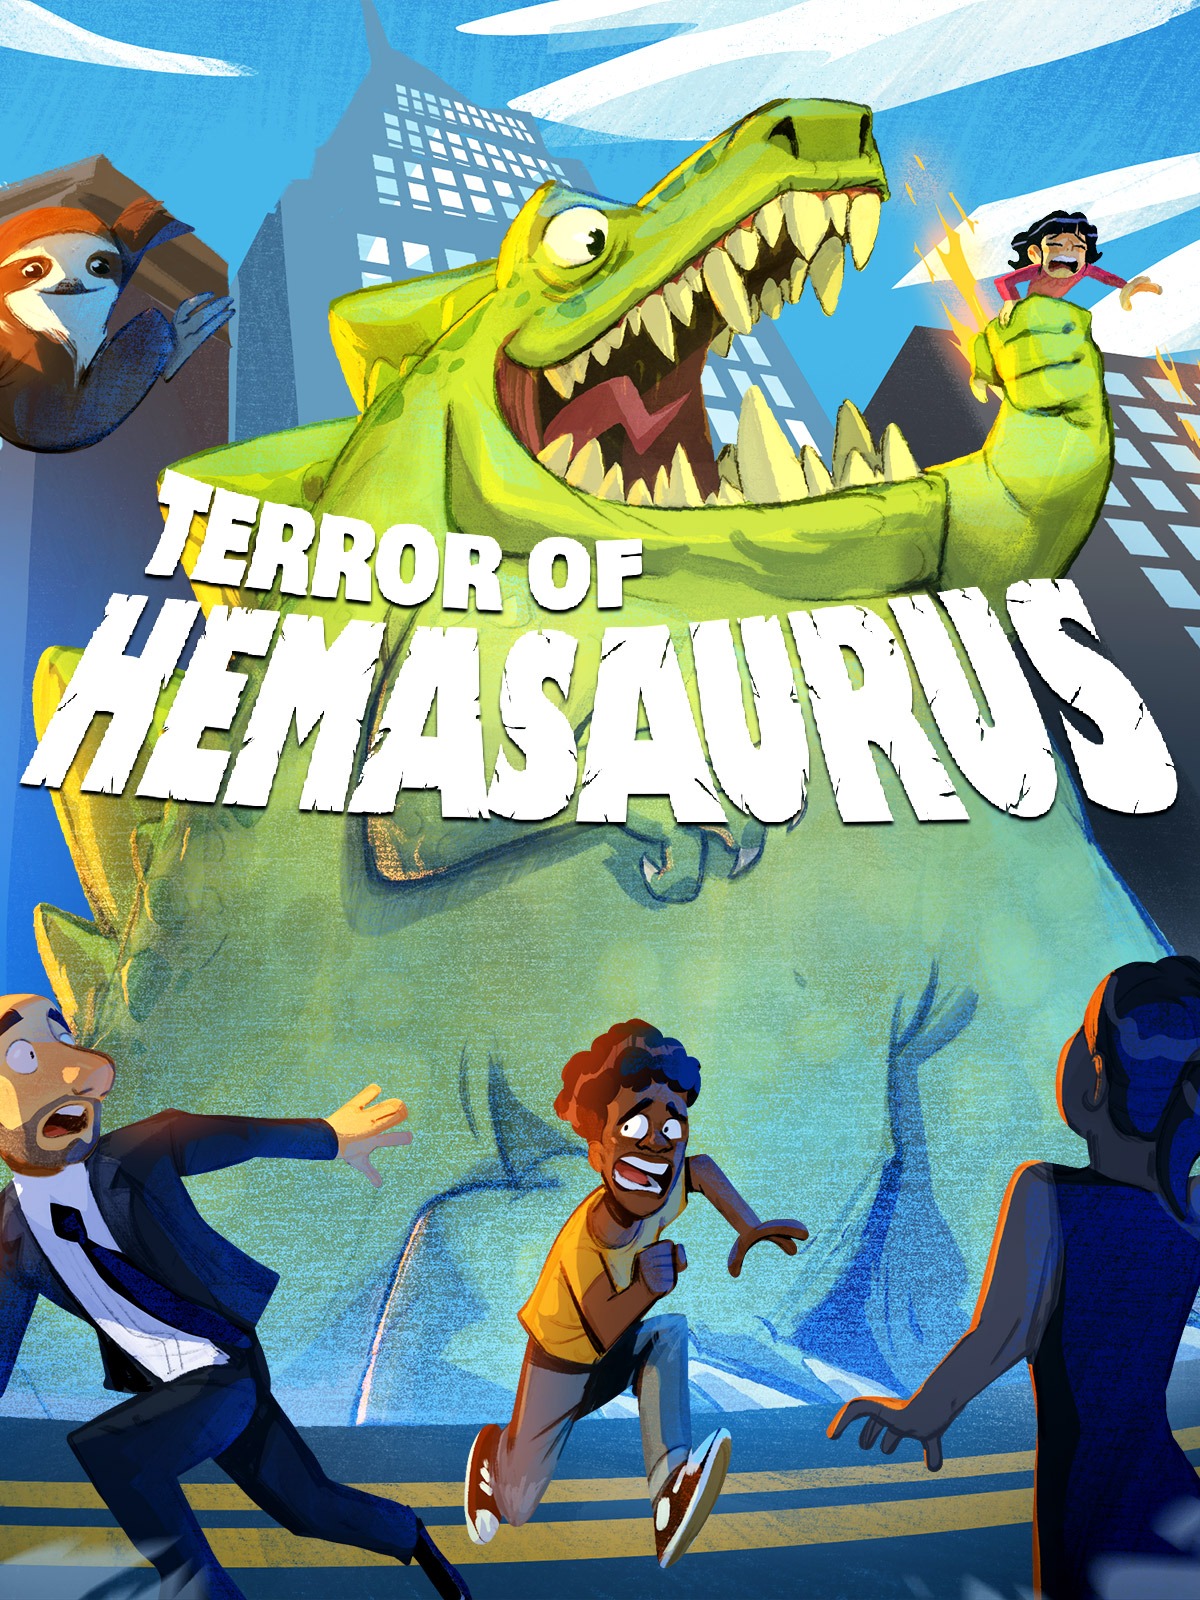 jaquette du jeu vidéo Terror of Hemasaurus